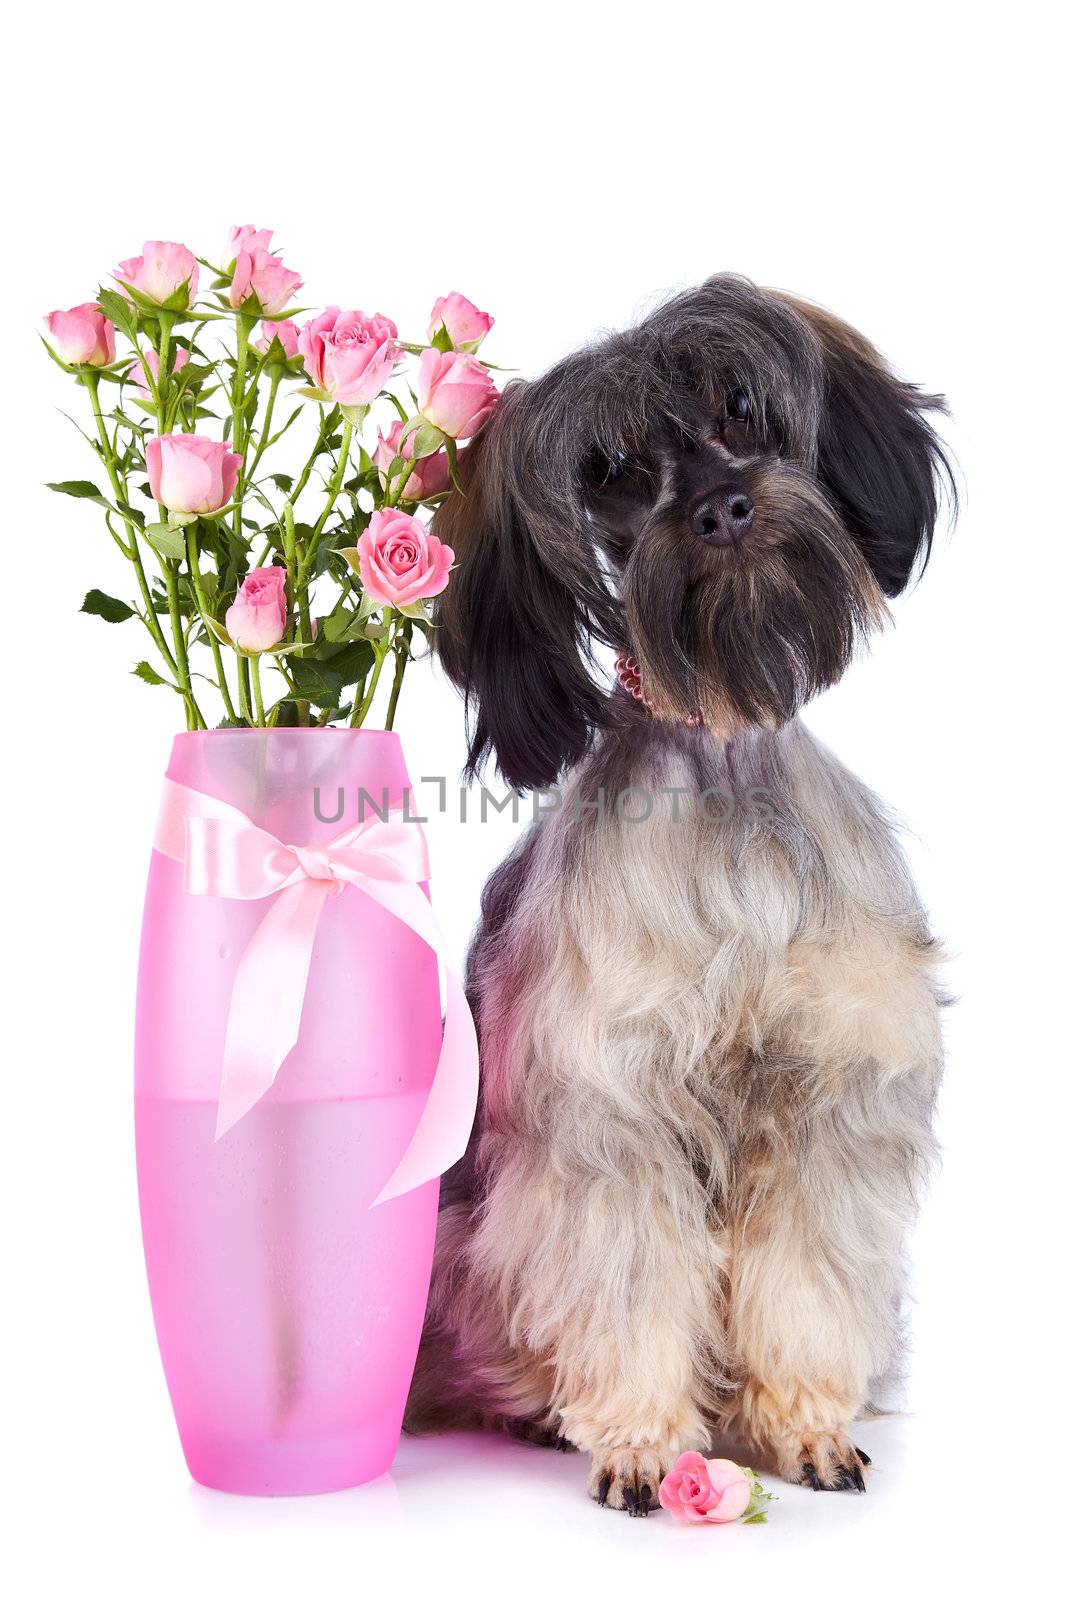 Decorative doggie and roses in a vase. by Azaliya